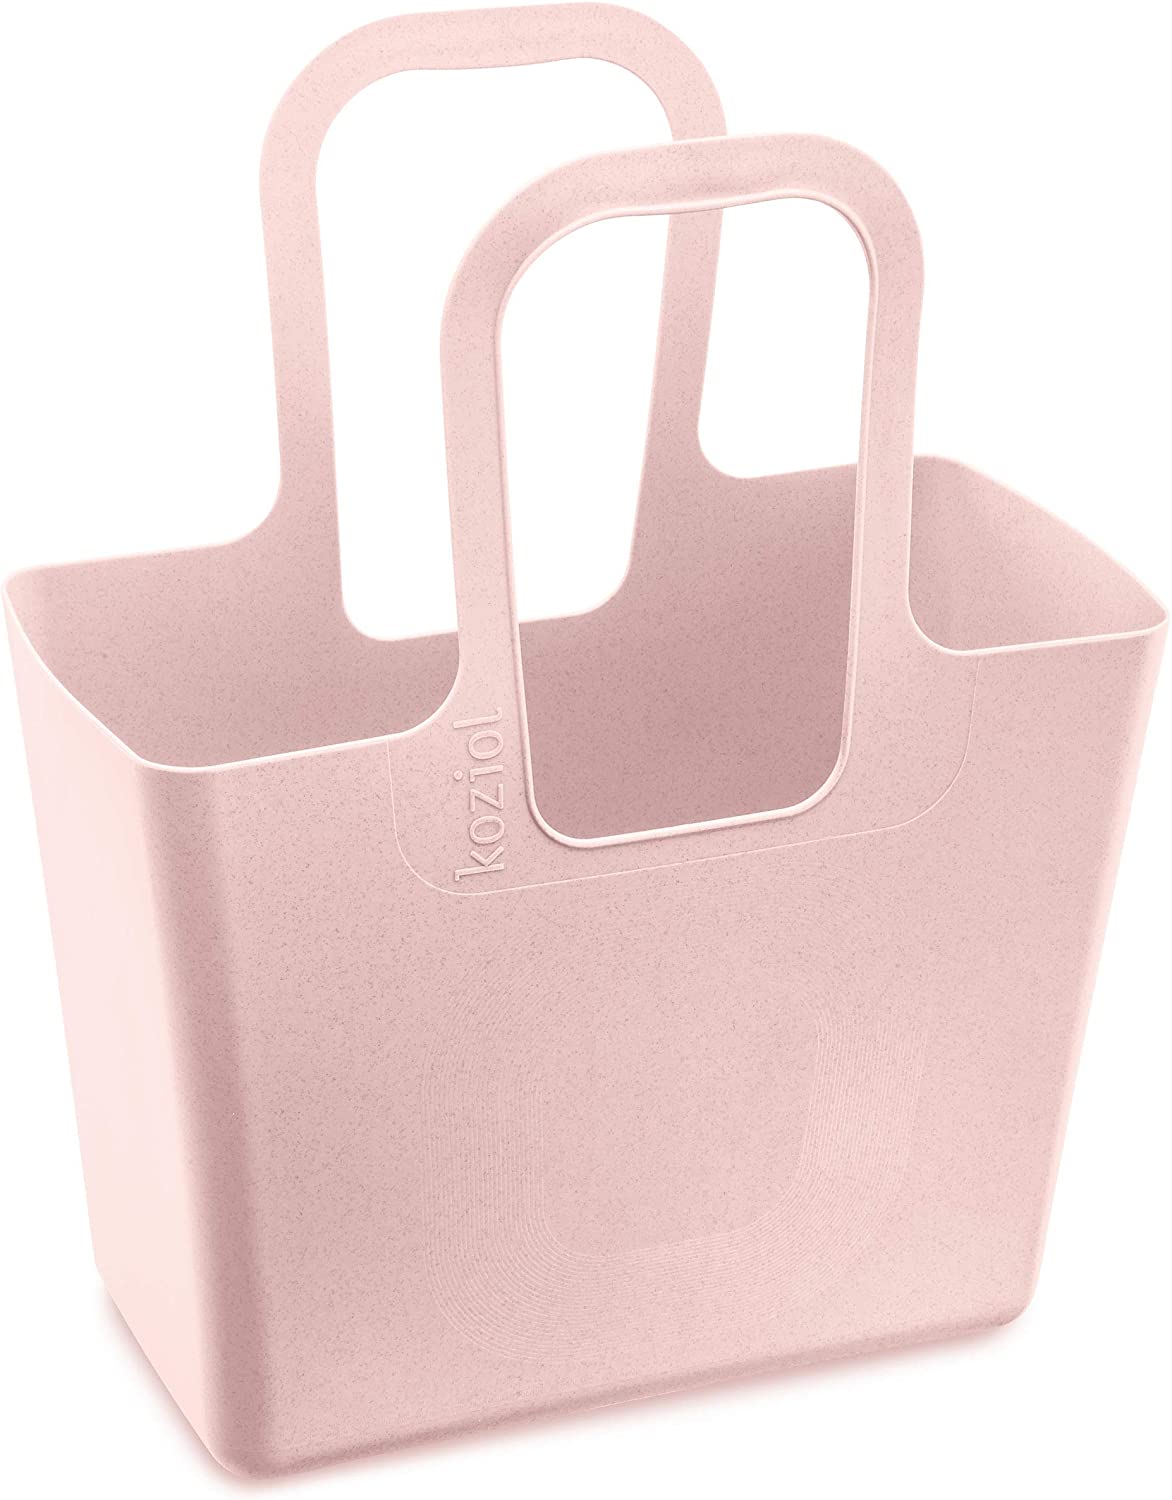 koziol Bag, Organic pink, xl, Large shopping bag XL